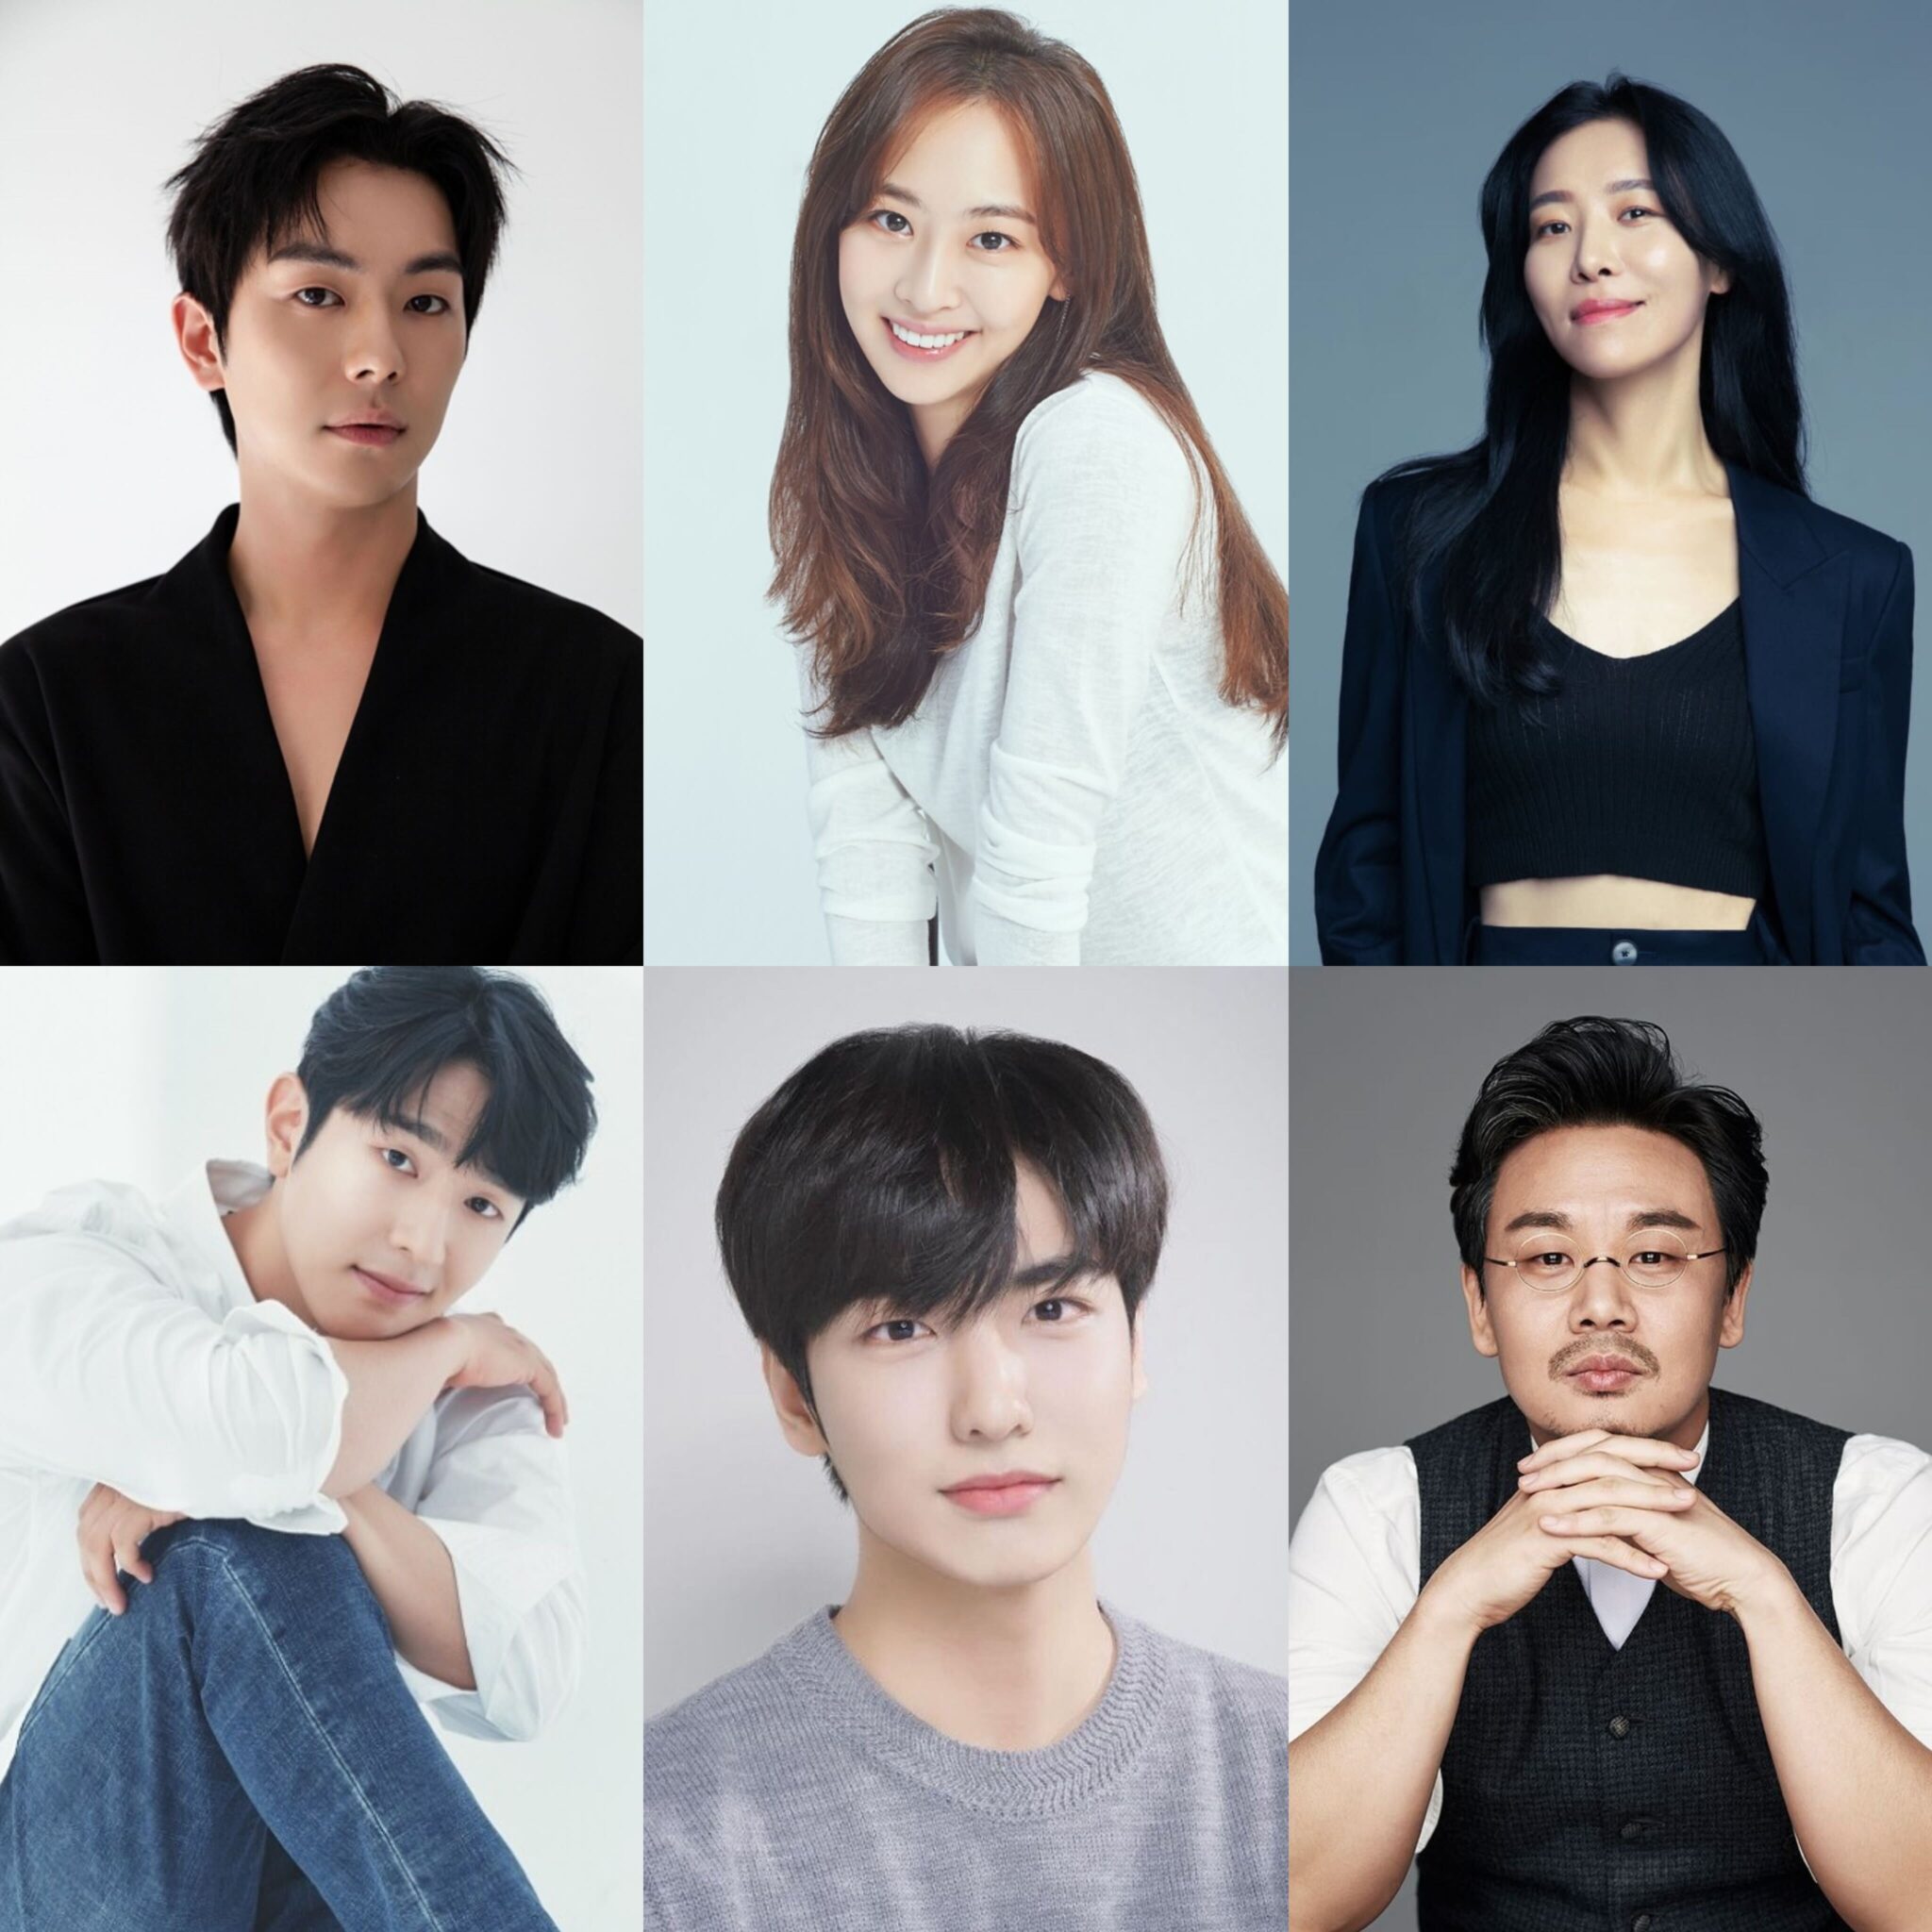 Casting news for MBC's fantasy drama Kkokdu's Season